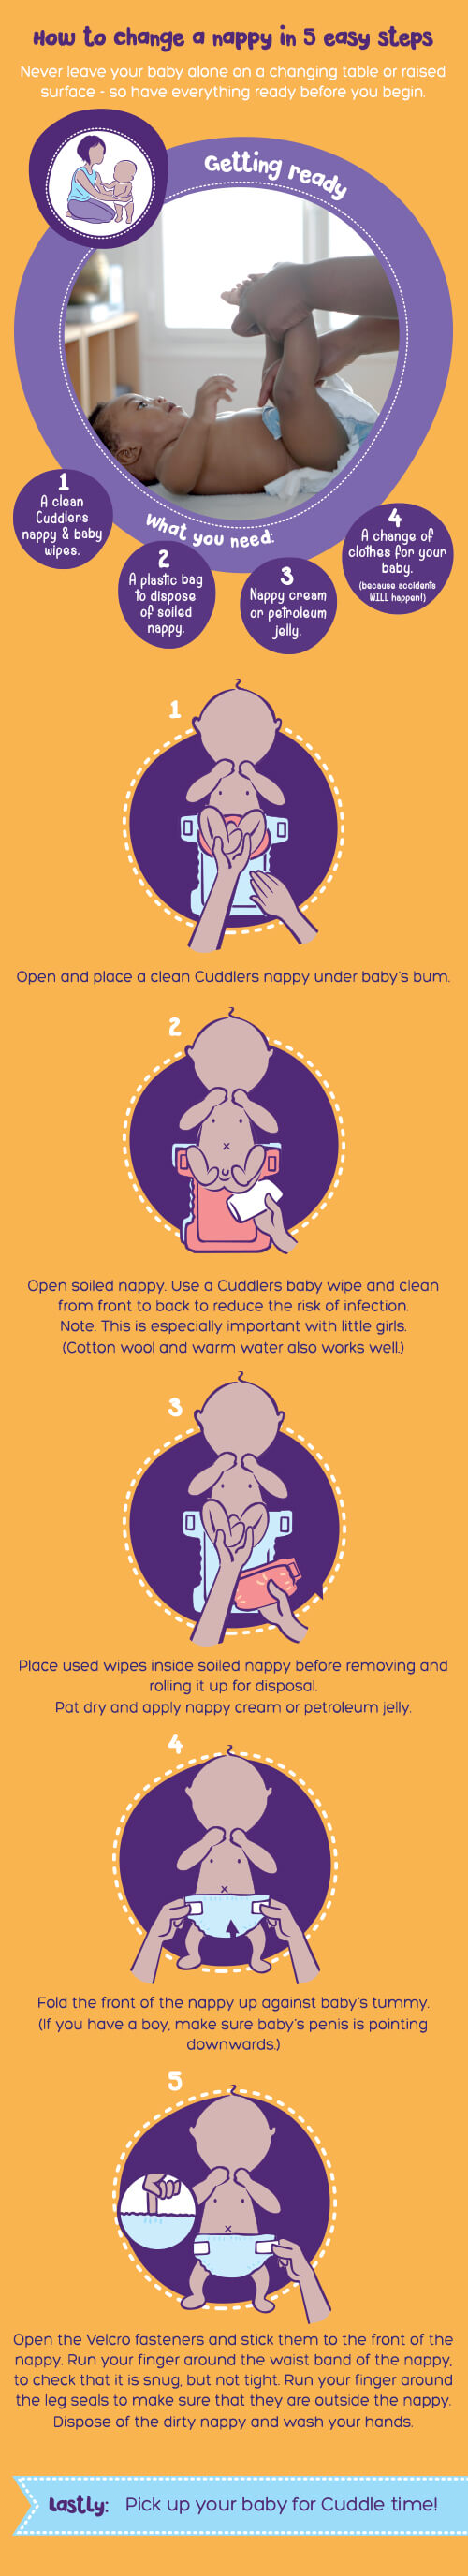 Cuddlers-Tips-Milestones_Mobile-v1